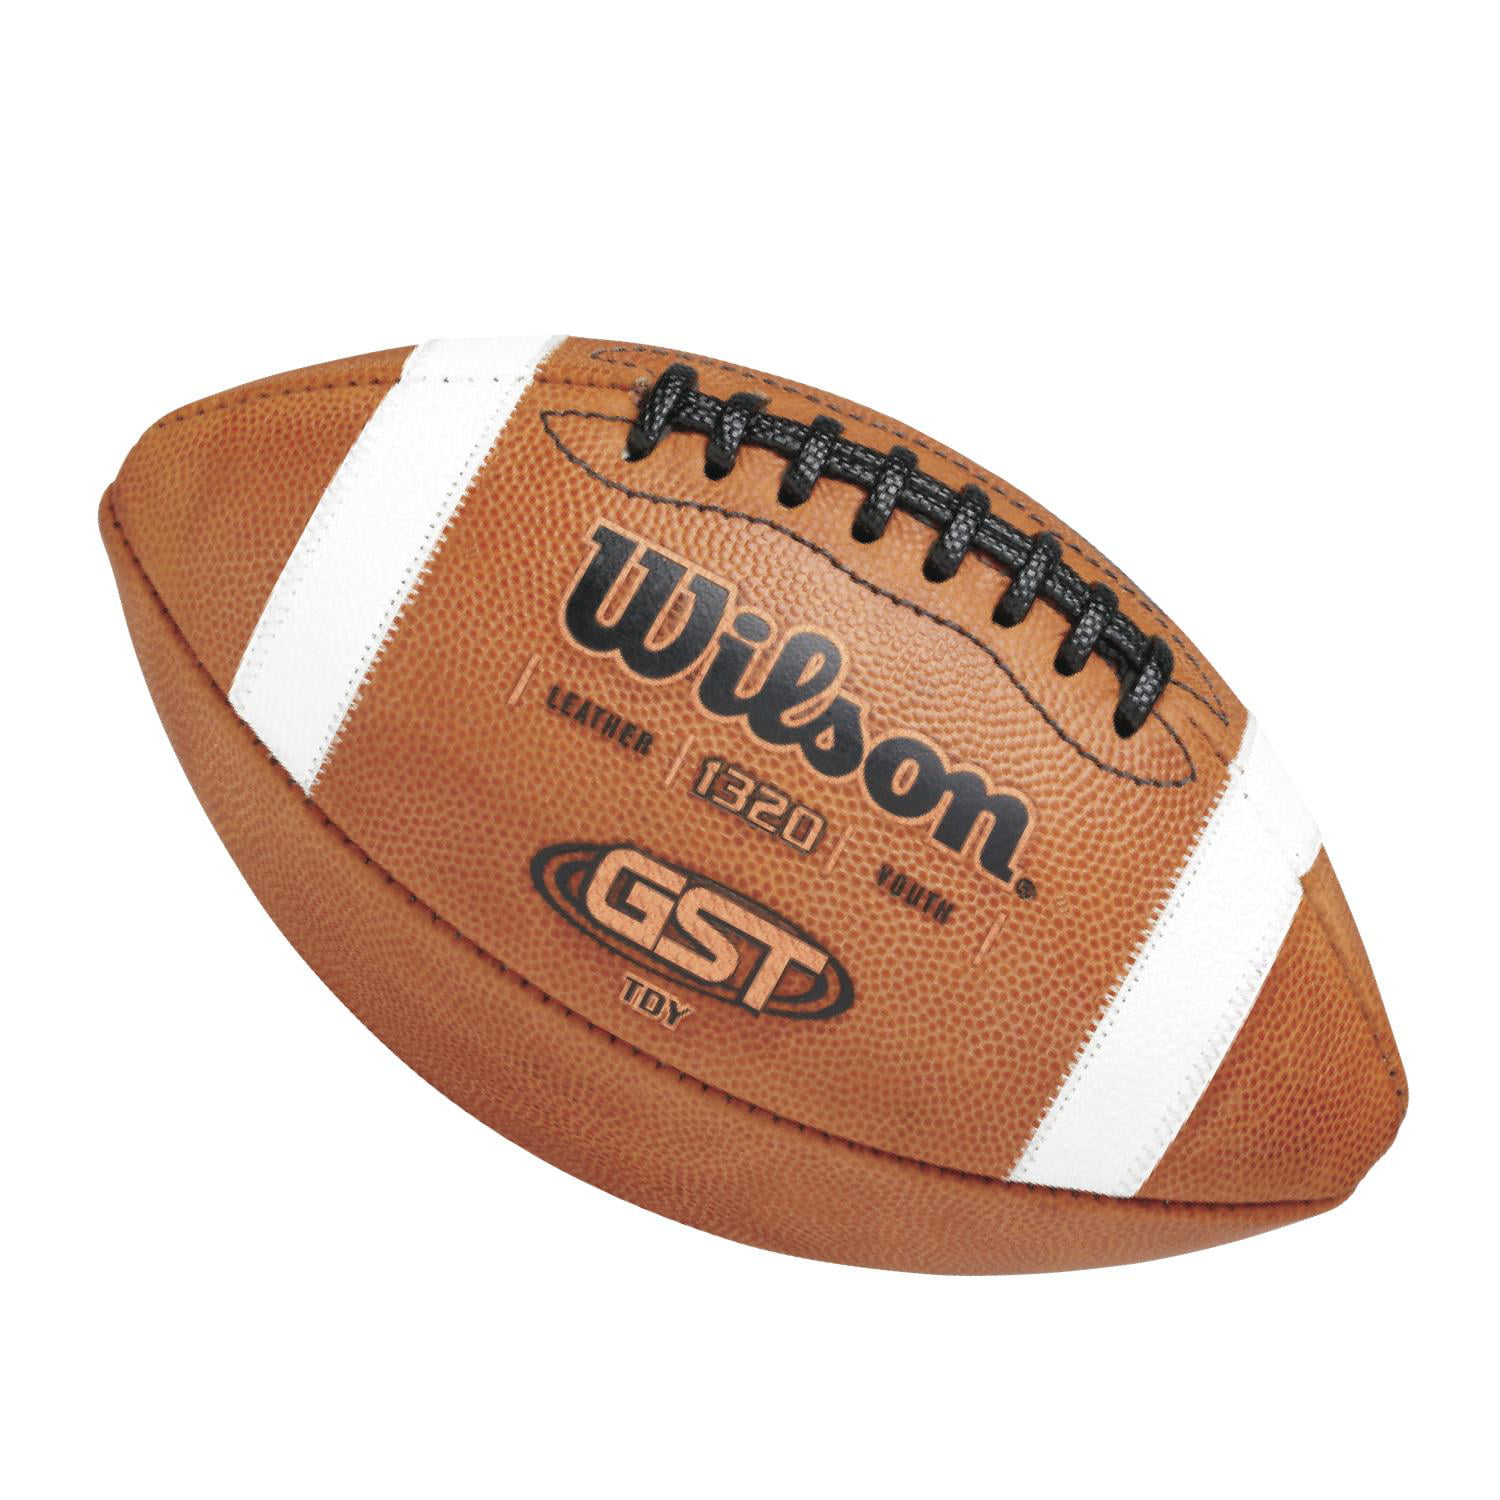 Wilson GST Junior/Intermediate Leather Football 